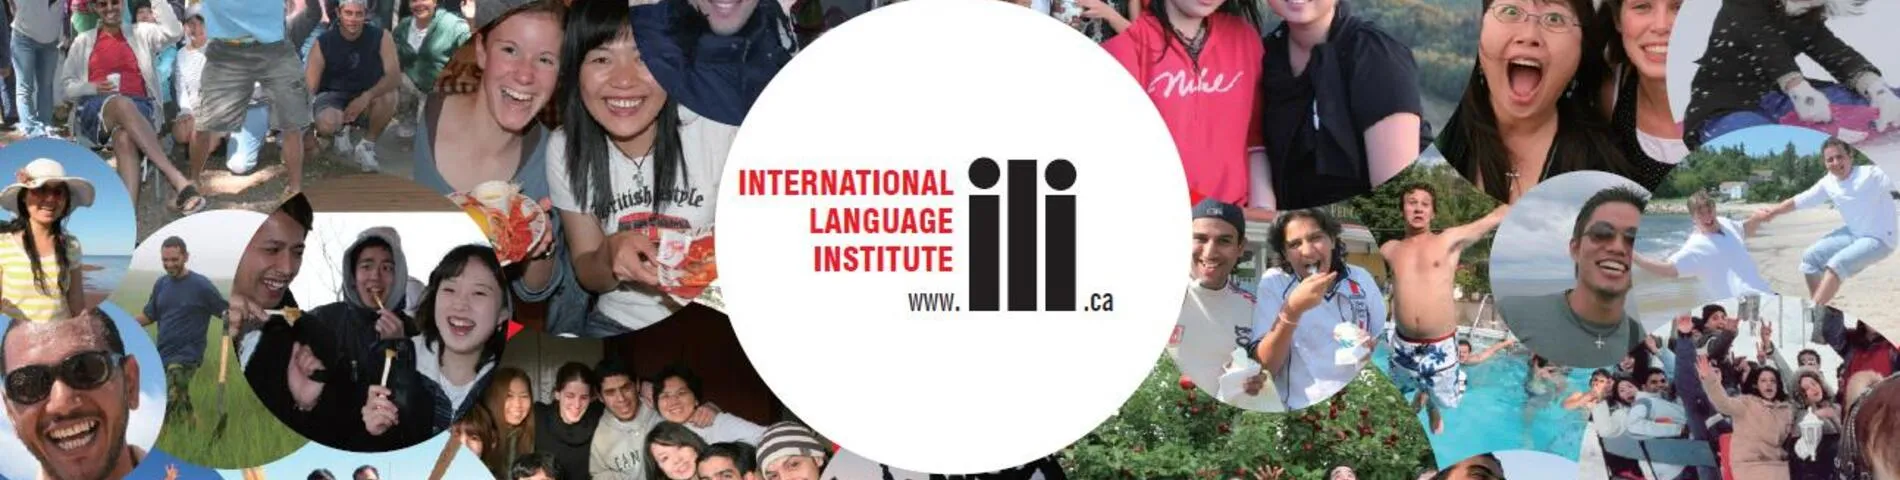 ILI - International Language Institute snímek 1	